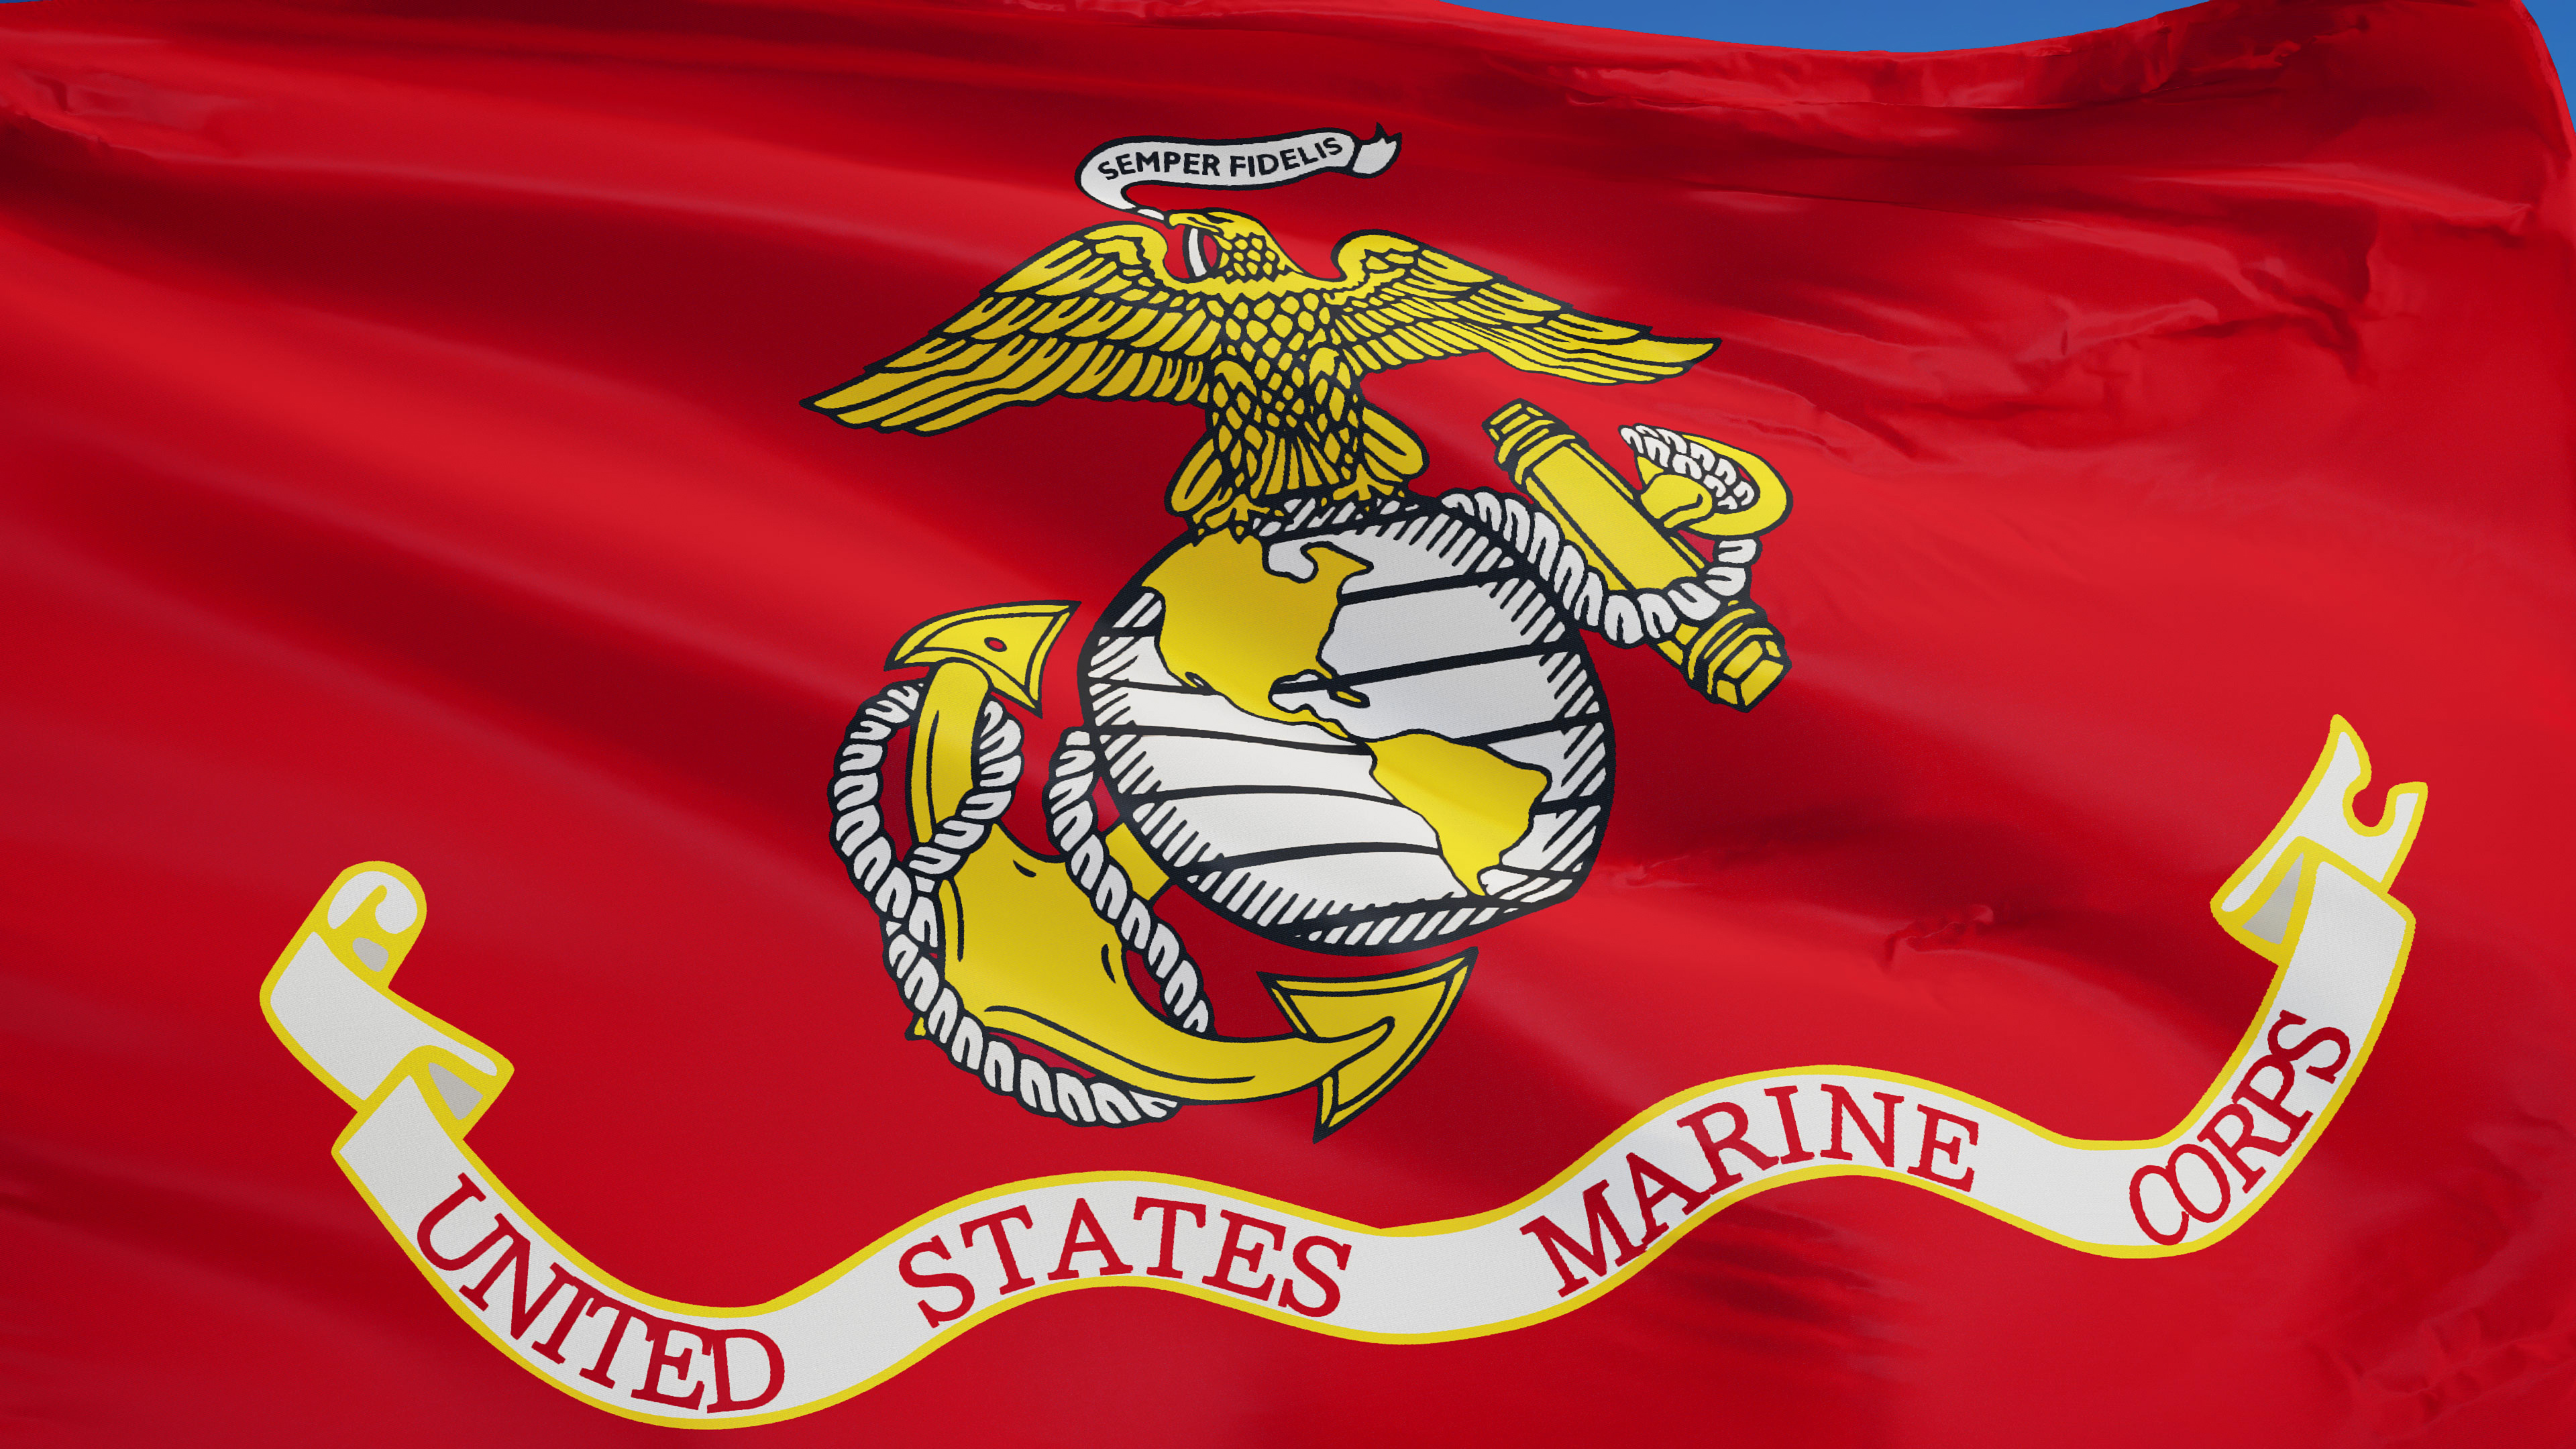 Marine Corp flag image.jpeg